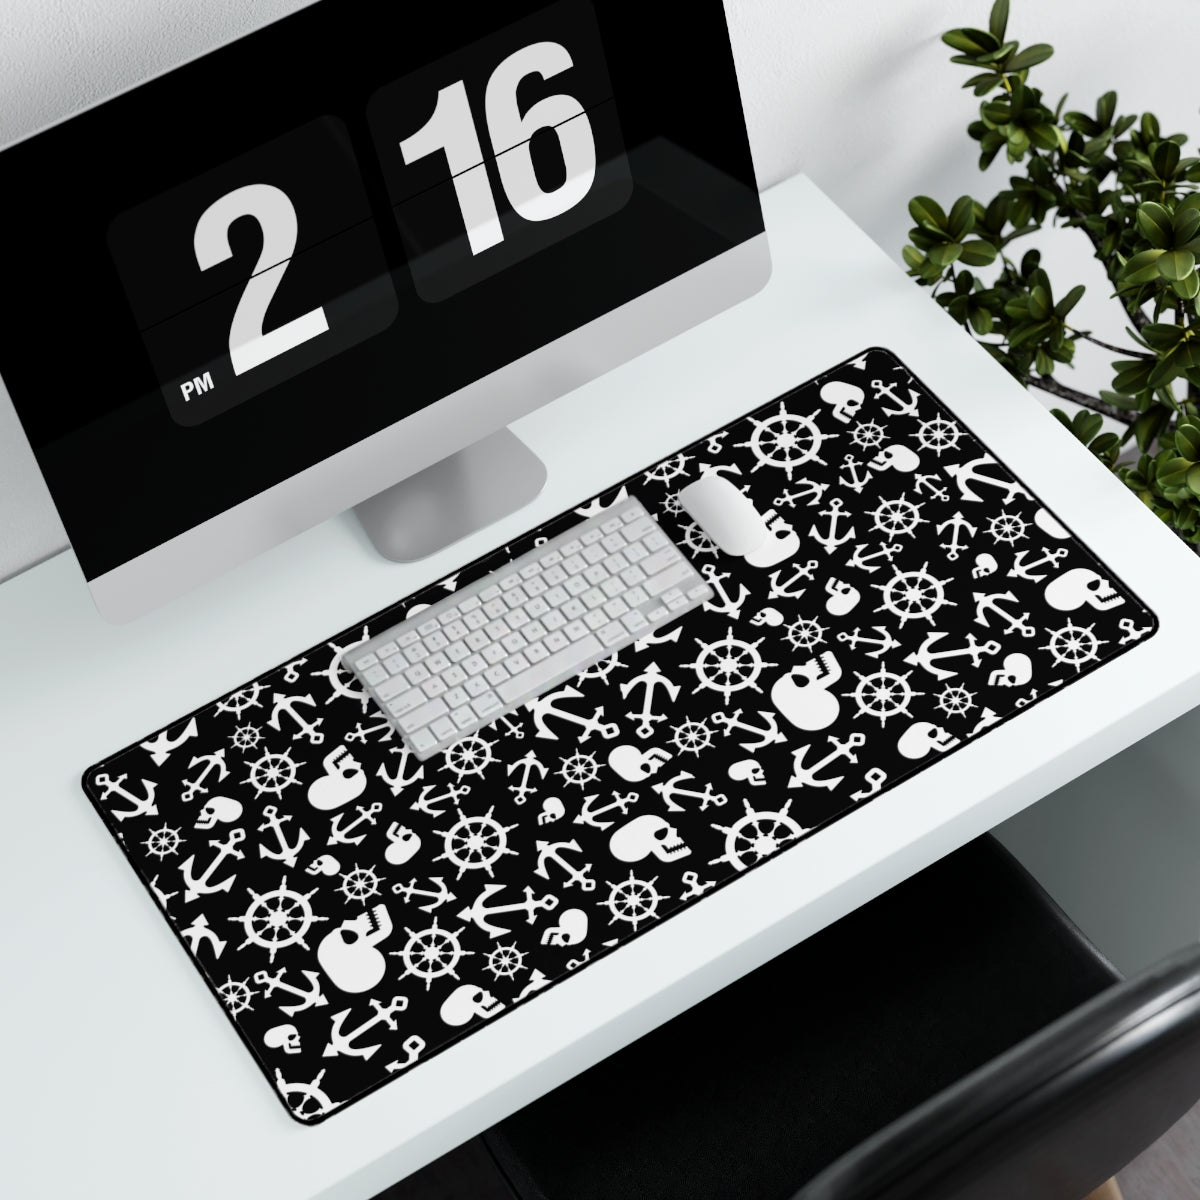 Desk Mat - Anchor, rudder and skull patterns